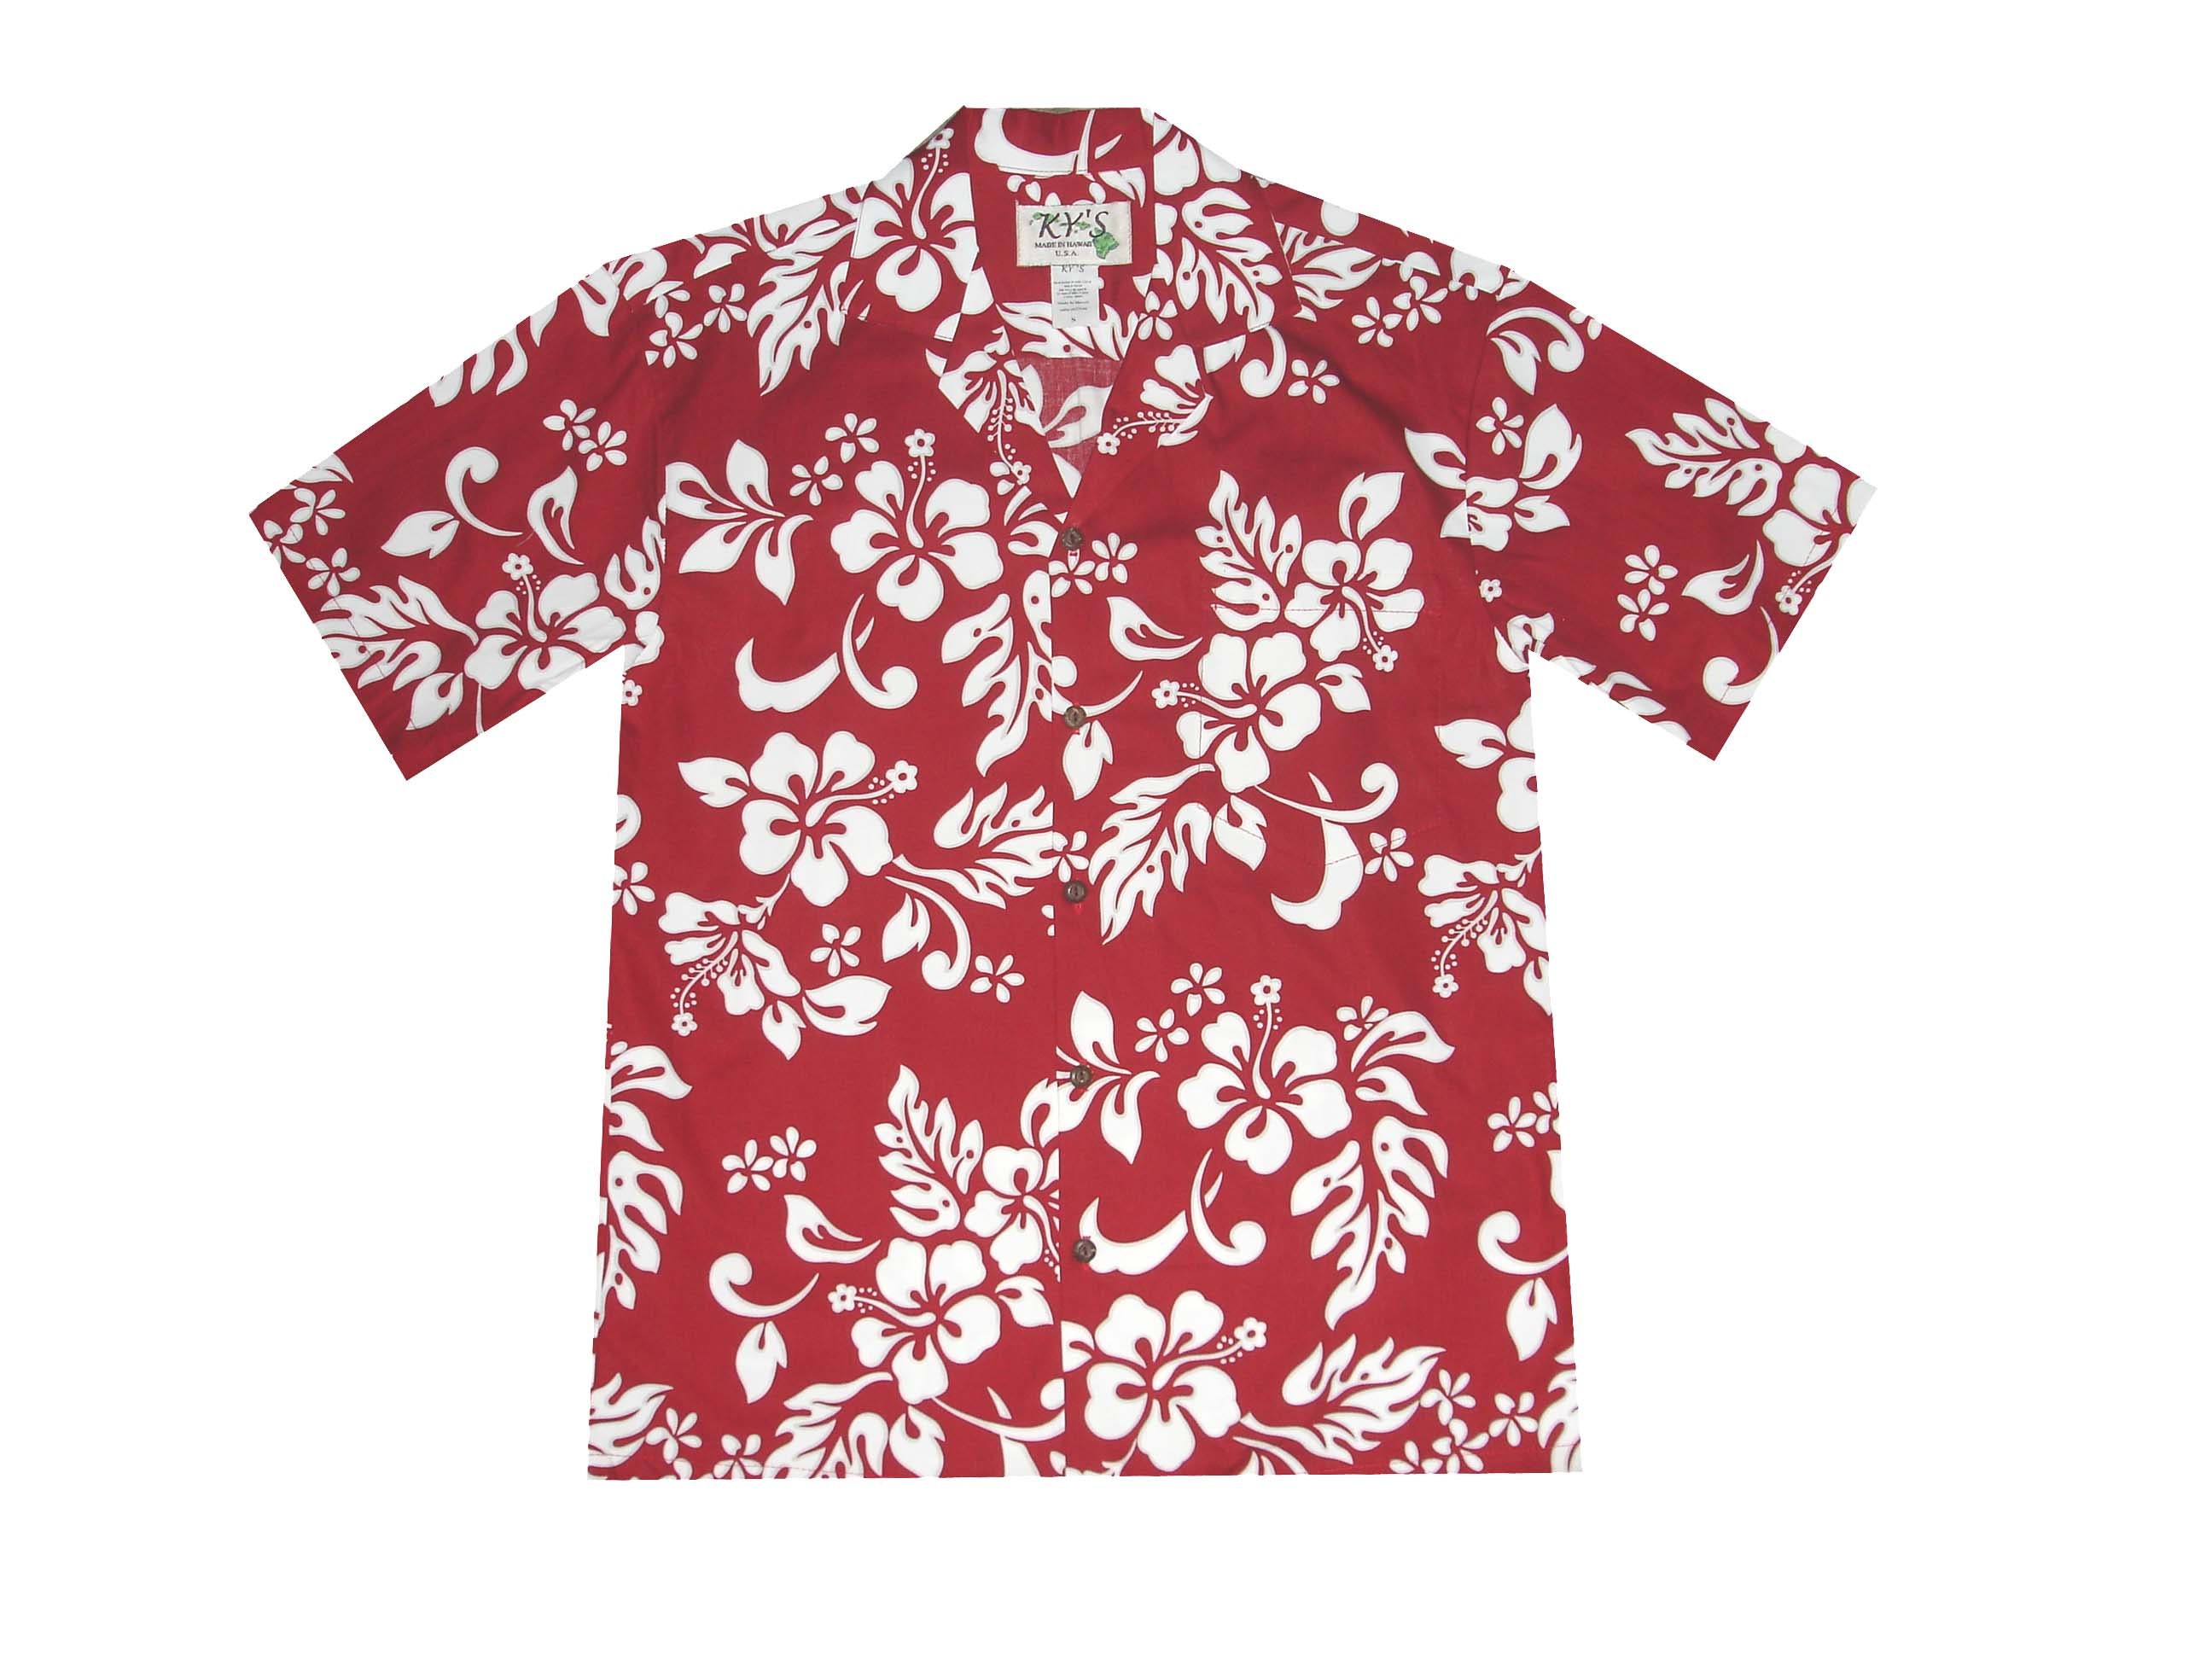 Ky's Wahiawa Tropical Navy Blue Cotton Men's Slim Fit Hawaiian Shirt